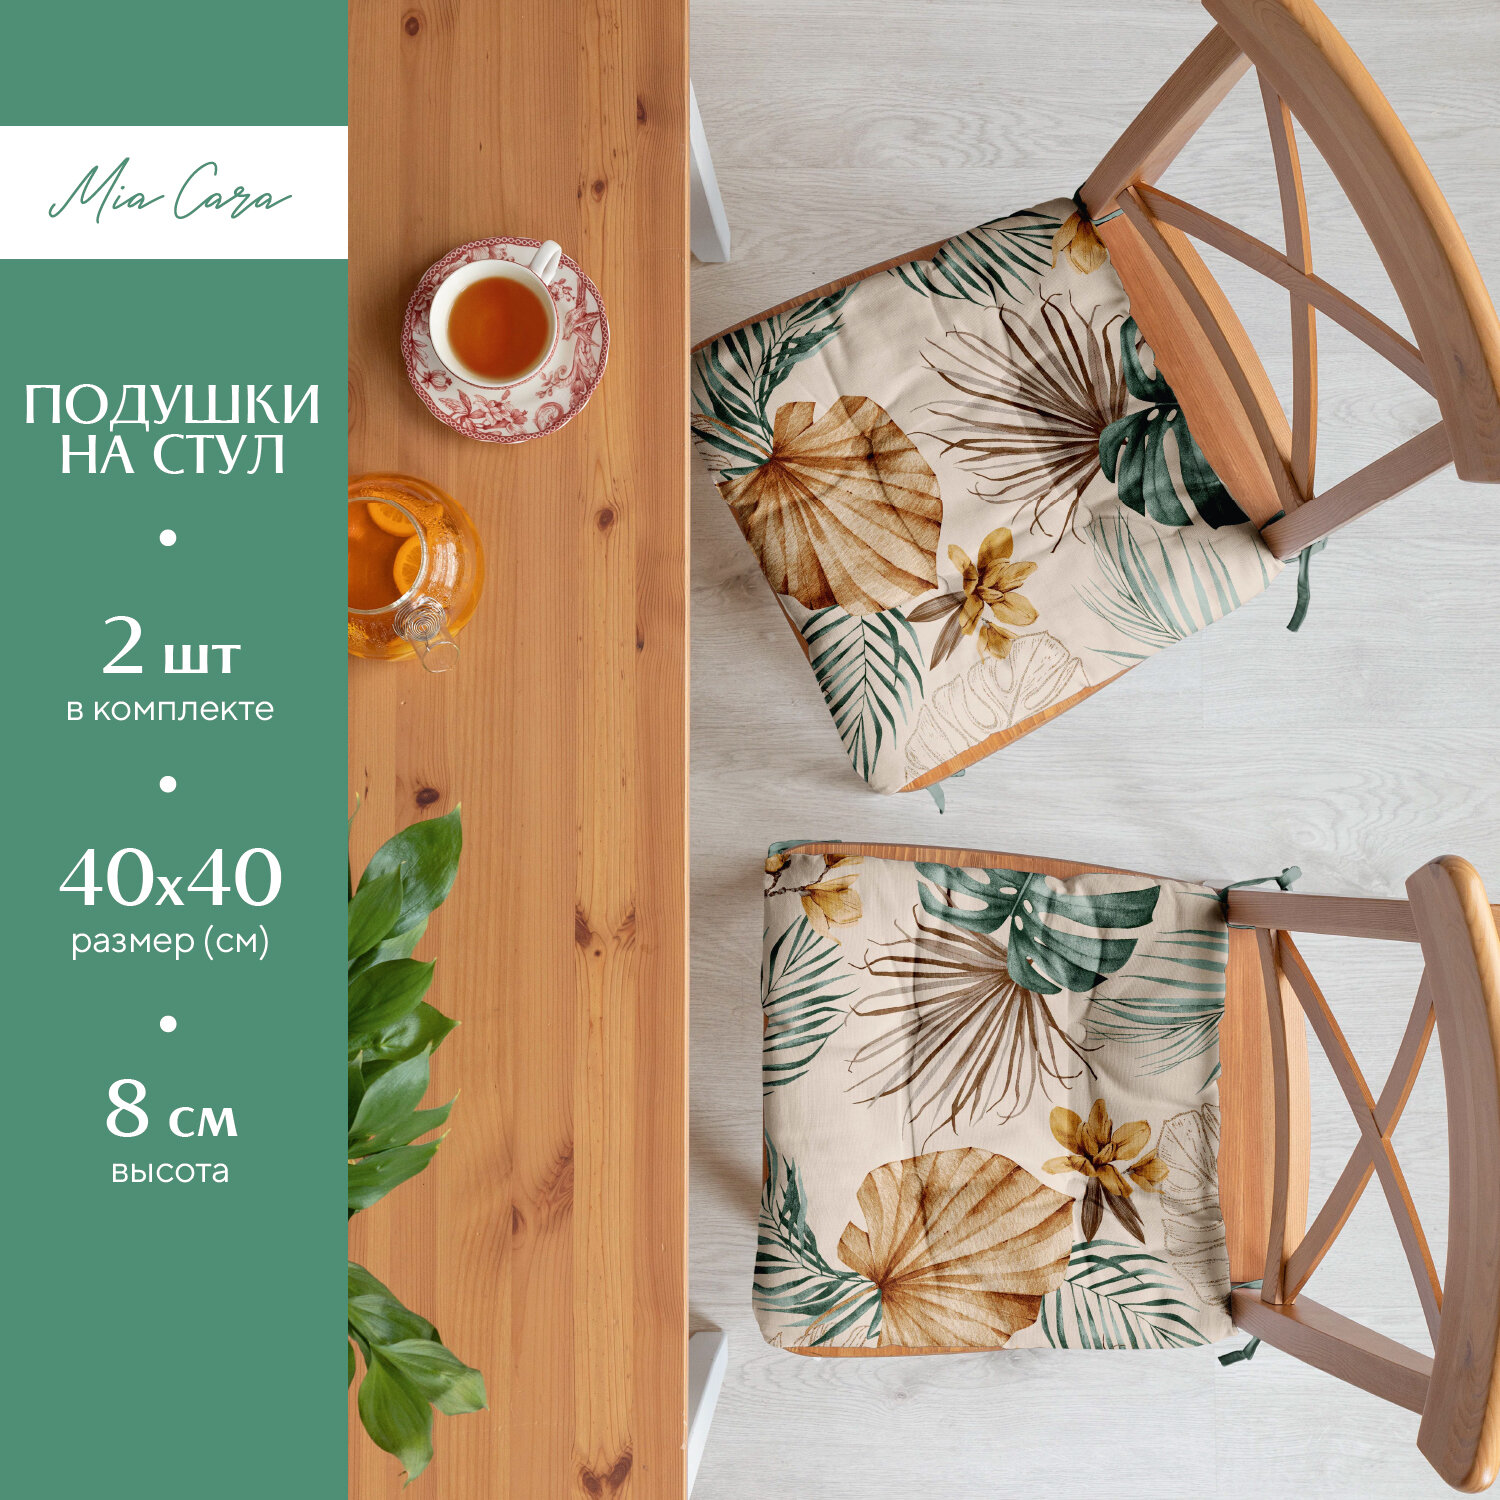 Комплект подушек на стул с тафтингом квадратных 40х40 (2 шт) "Mia Cara" рис 30662-2 Tropical palm